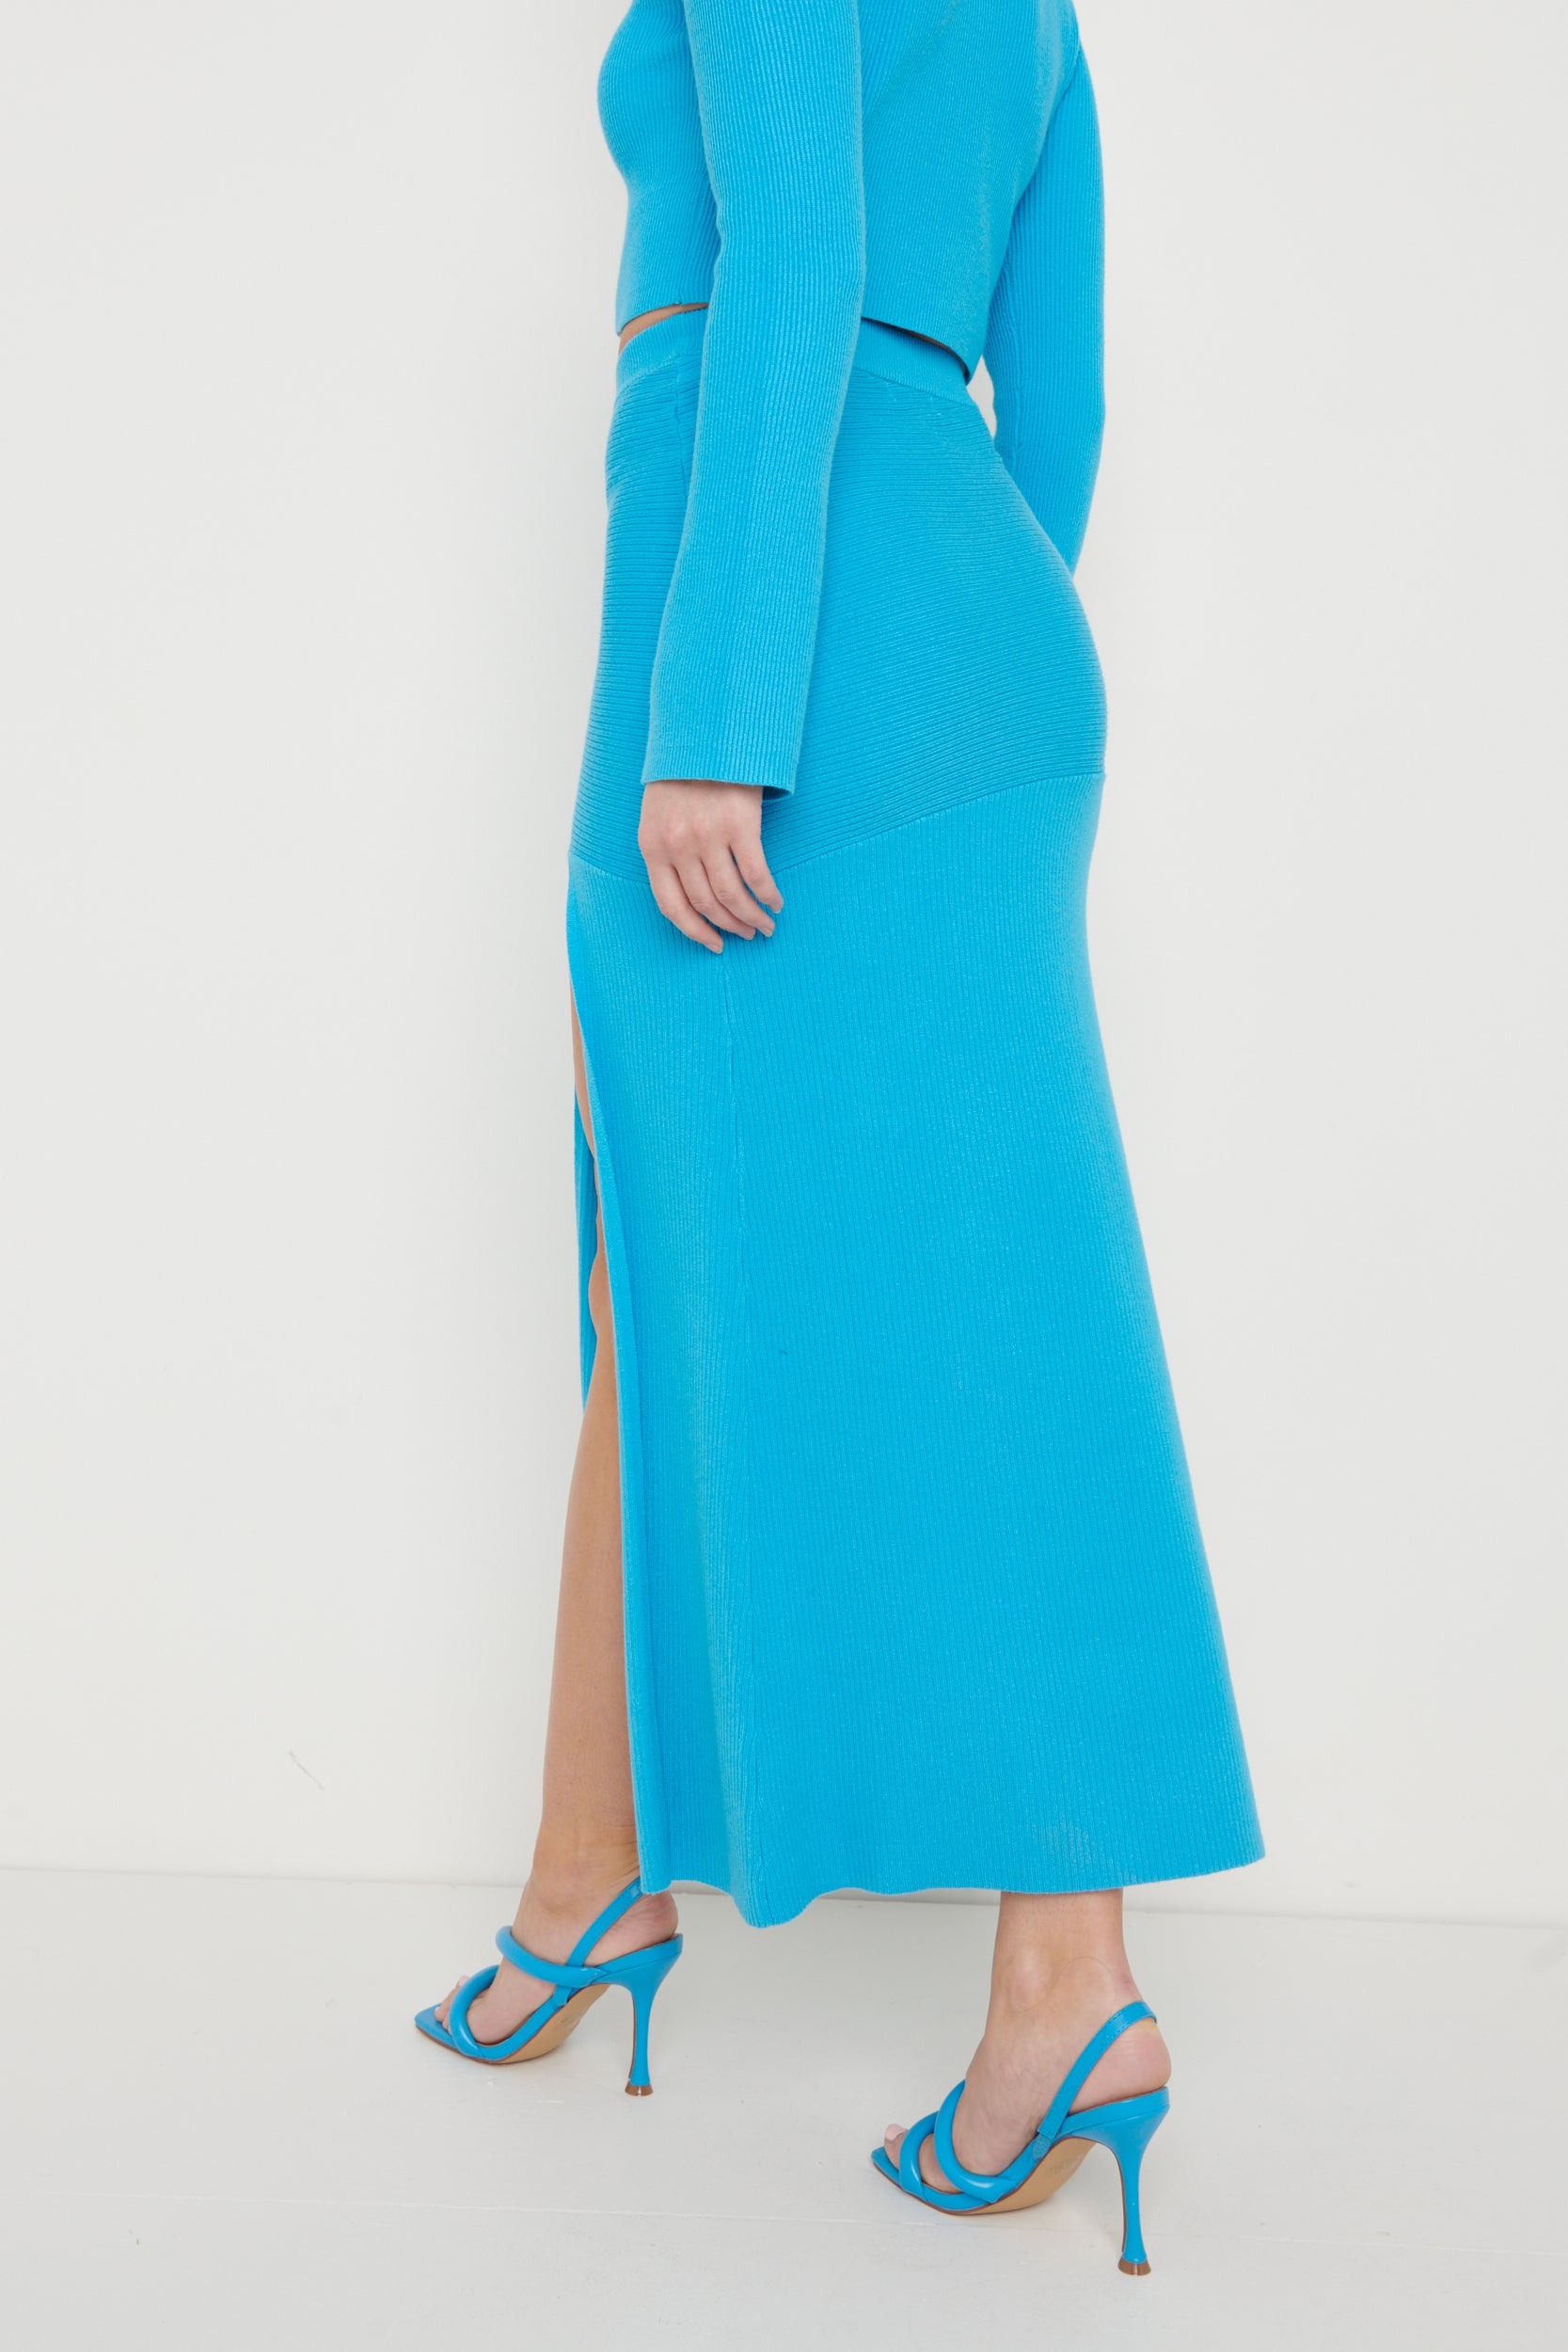 Sofia Asymmetric Knit Skirt - Aqua Blue